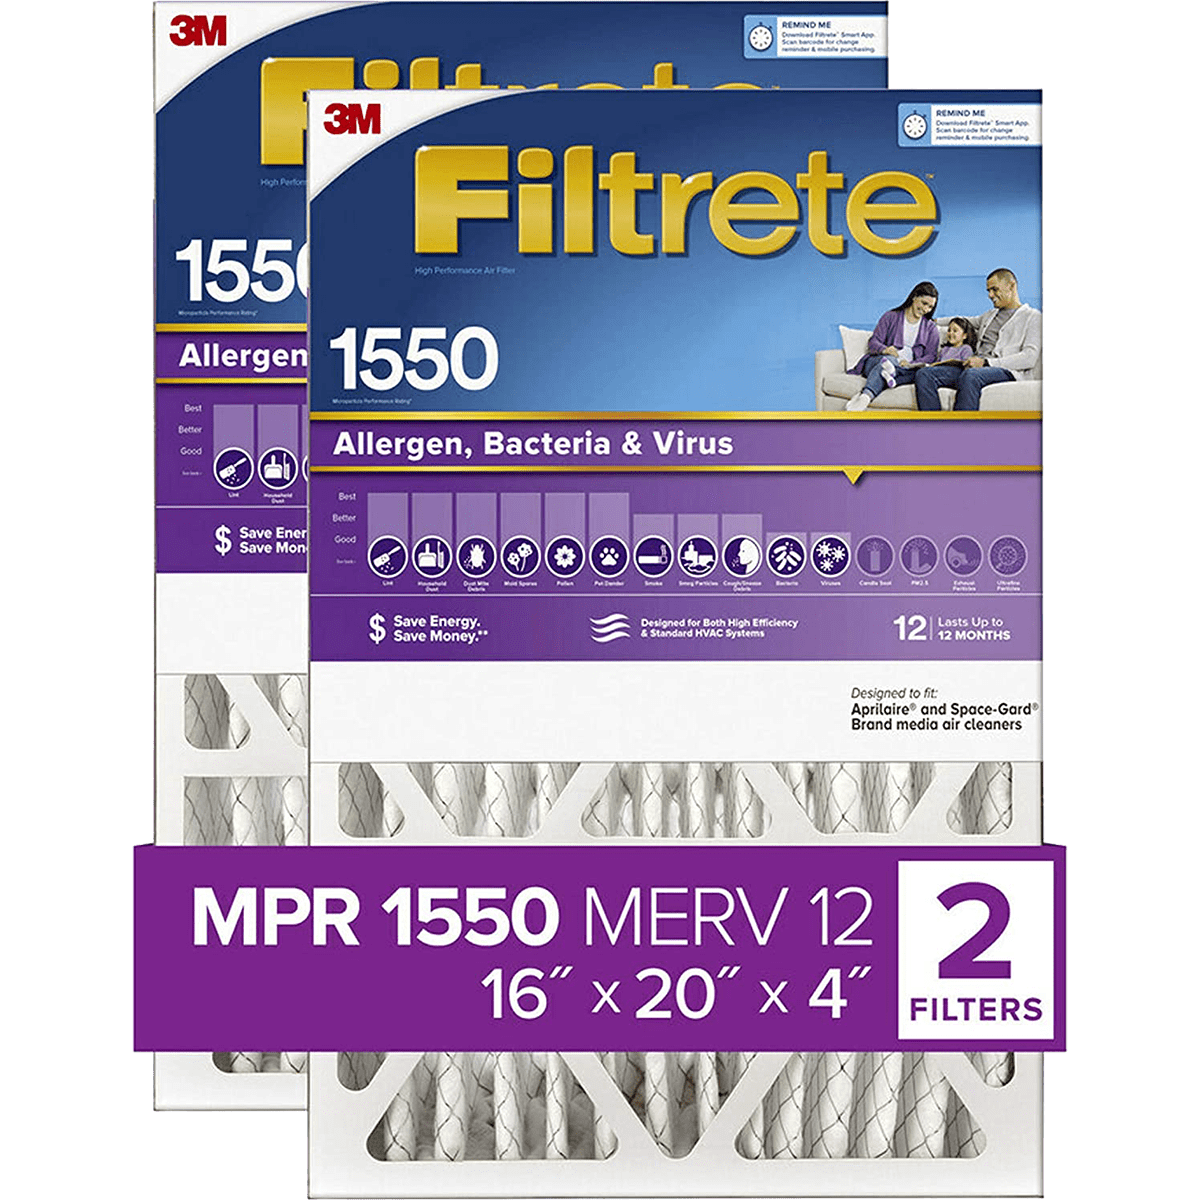 filtrete-healthy-living-1550-mpr-ultra-allergen-reduction-filters